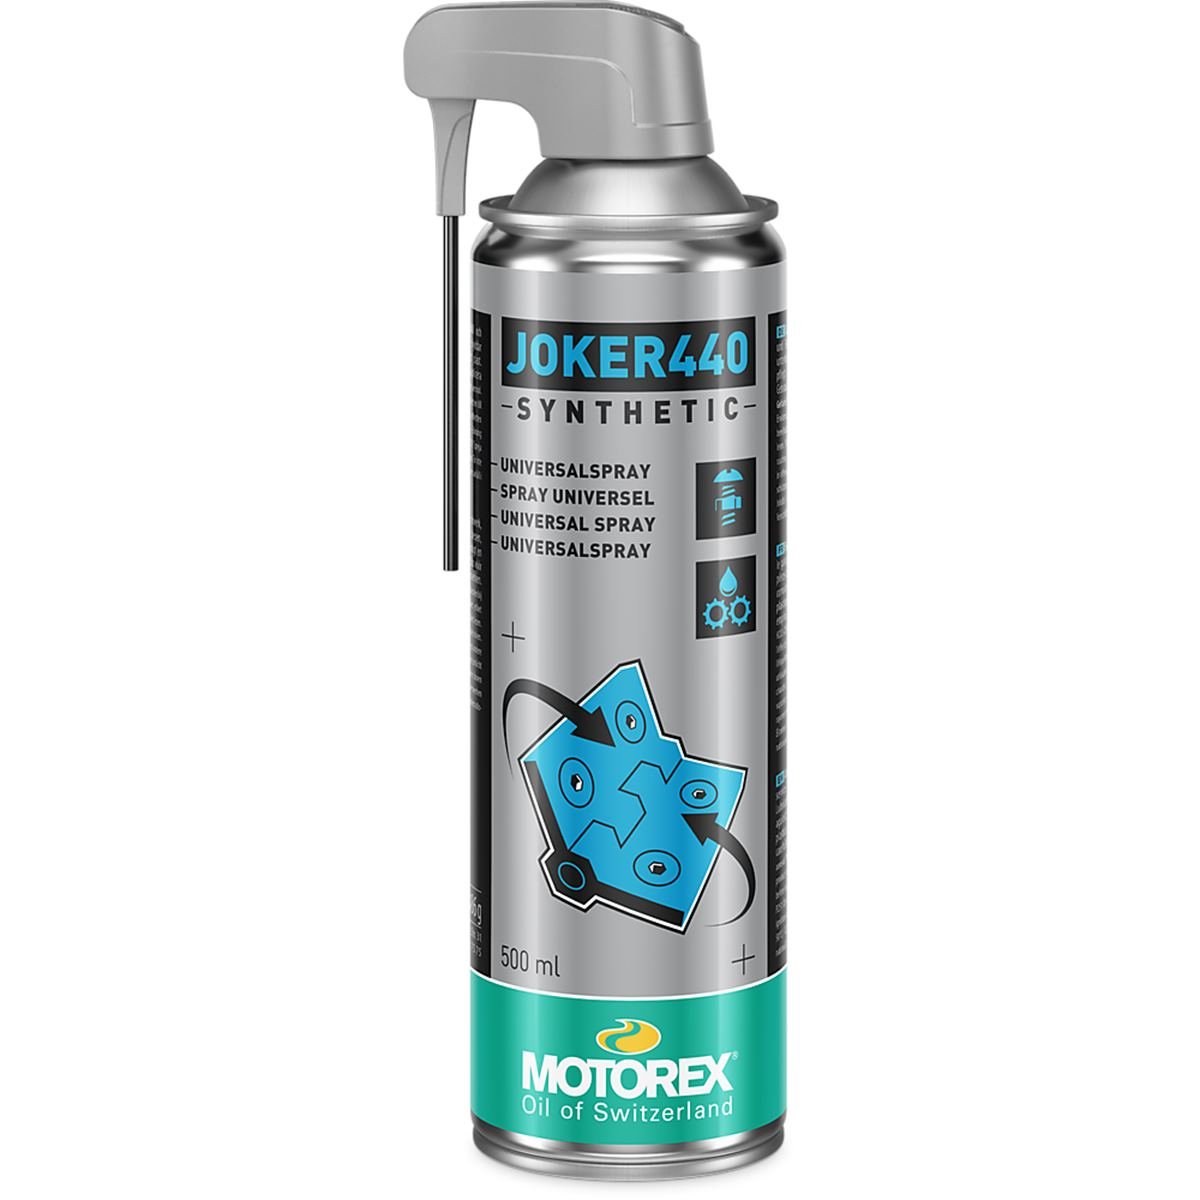 Motorex Synthetic Spray Joker 440 500 ml